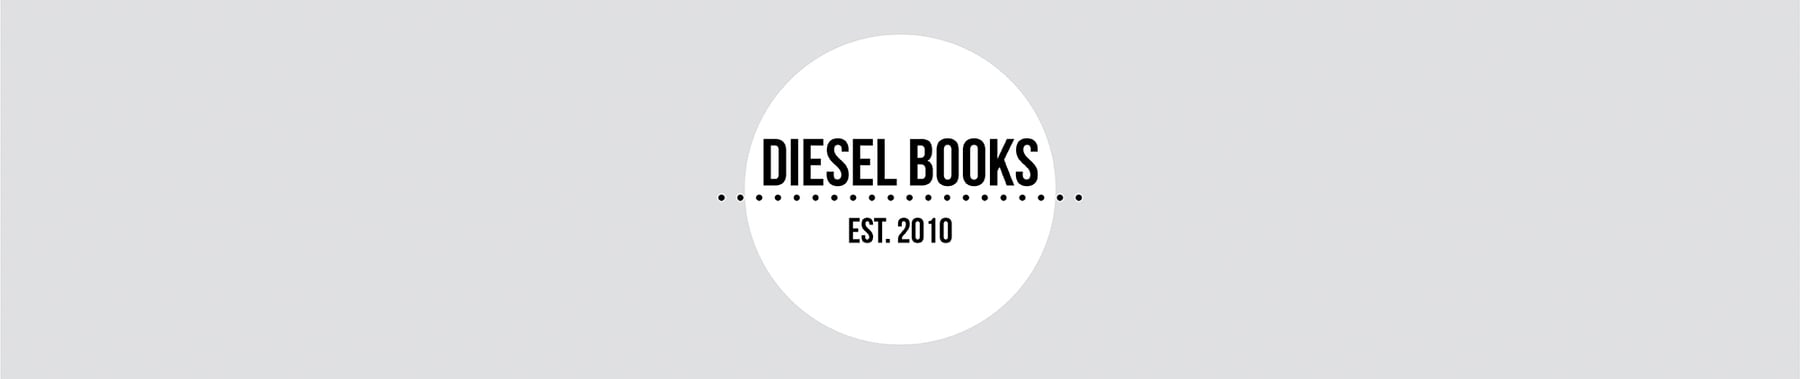 diesel books